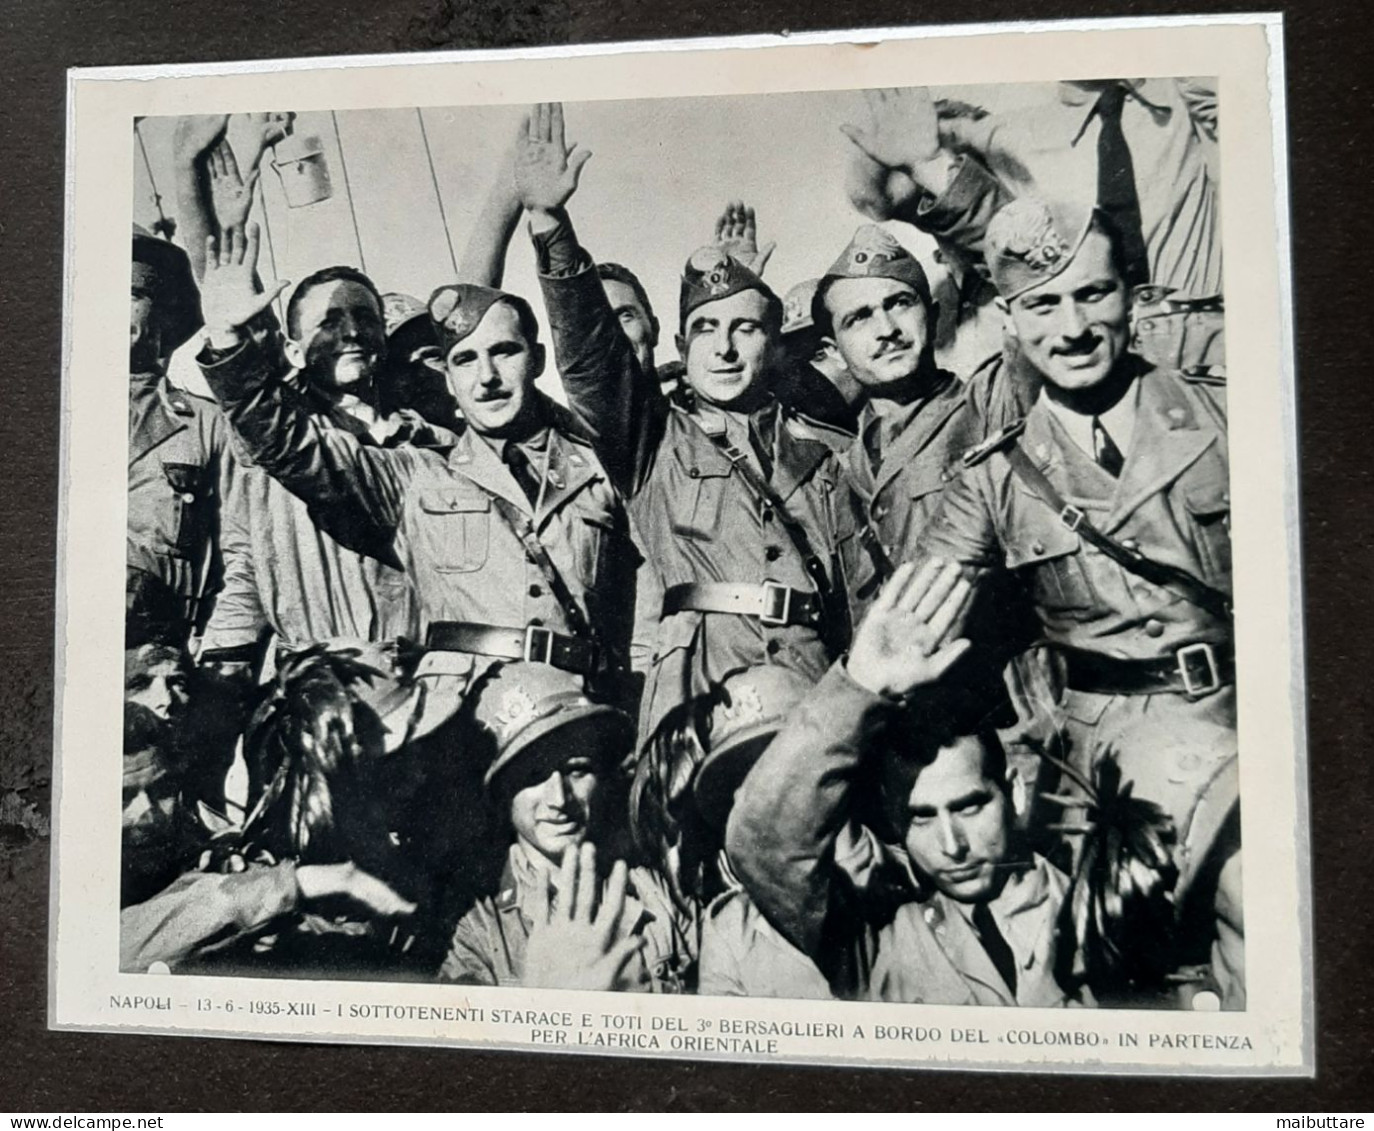 Album Contenete 34 Stampe Di Foto Su Fogli Di Carta Raffiguranti Benito Mussolini - Stampe Su Carta - Guerra, Militares